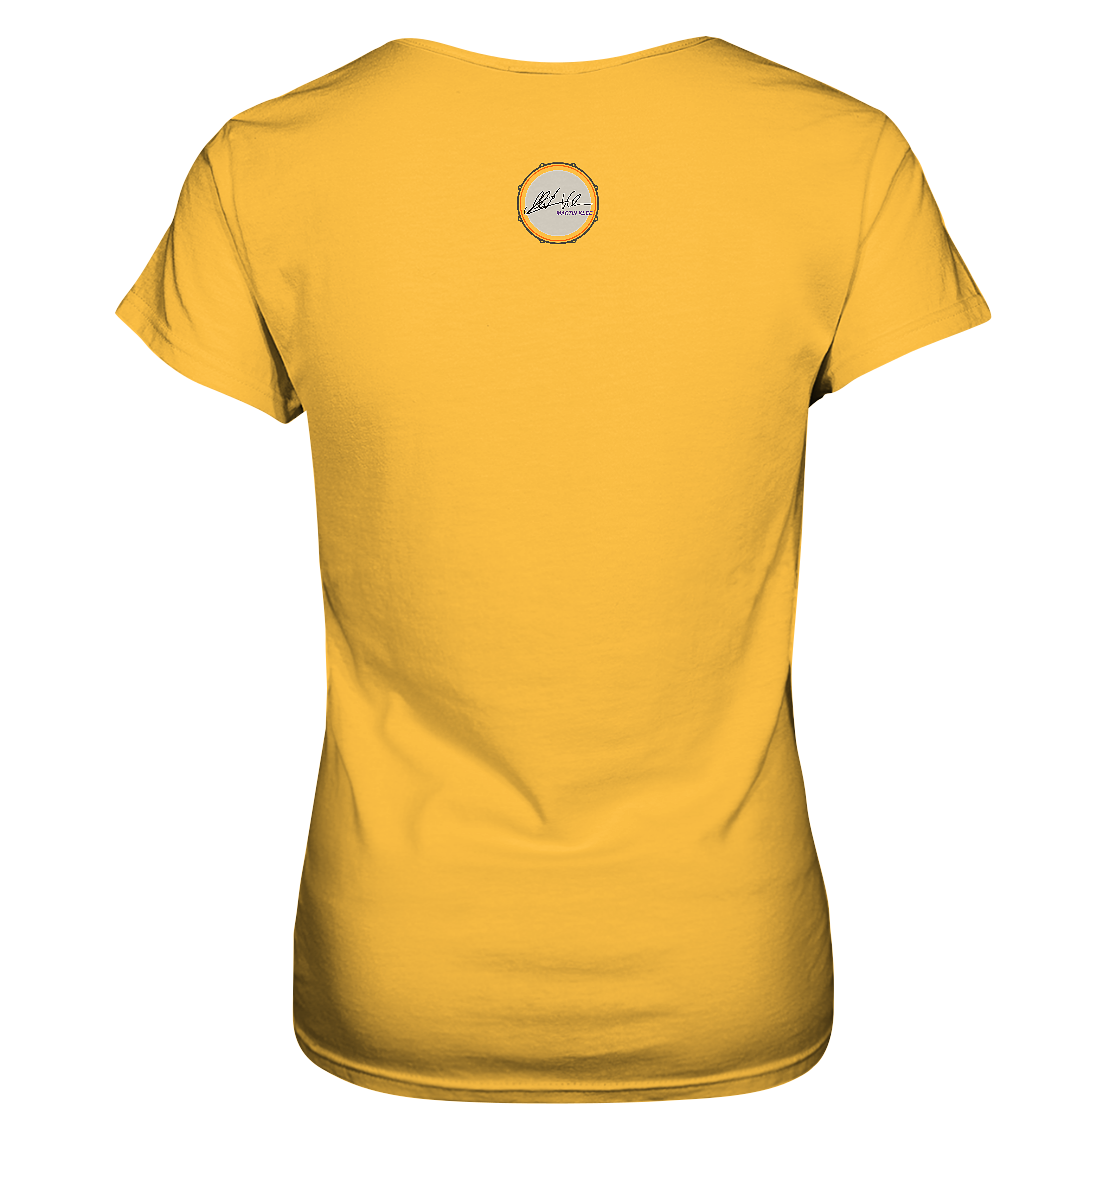 founder v2 - ladies shirt | various colors